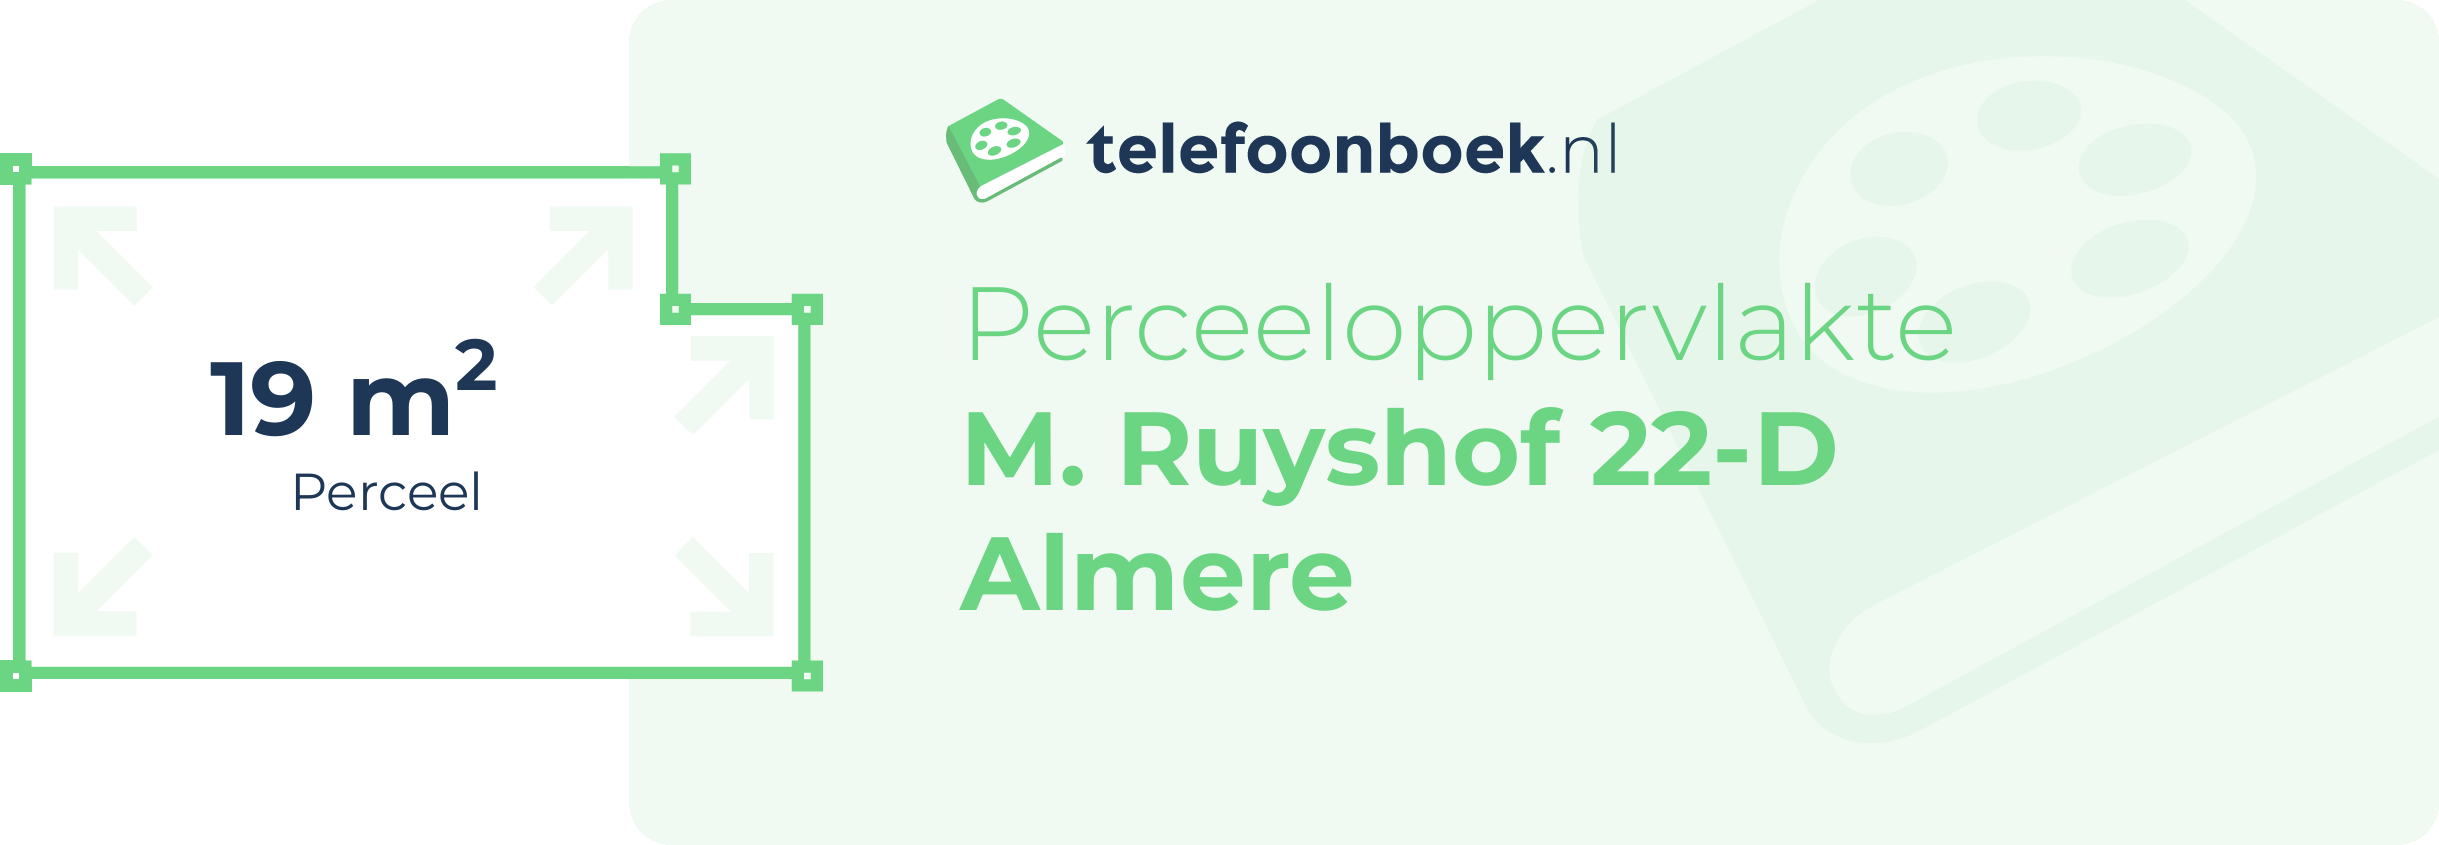 Perceeloppervlakte M. Ruyshof 22-D Almere